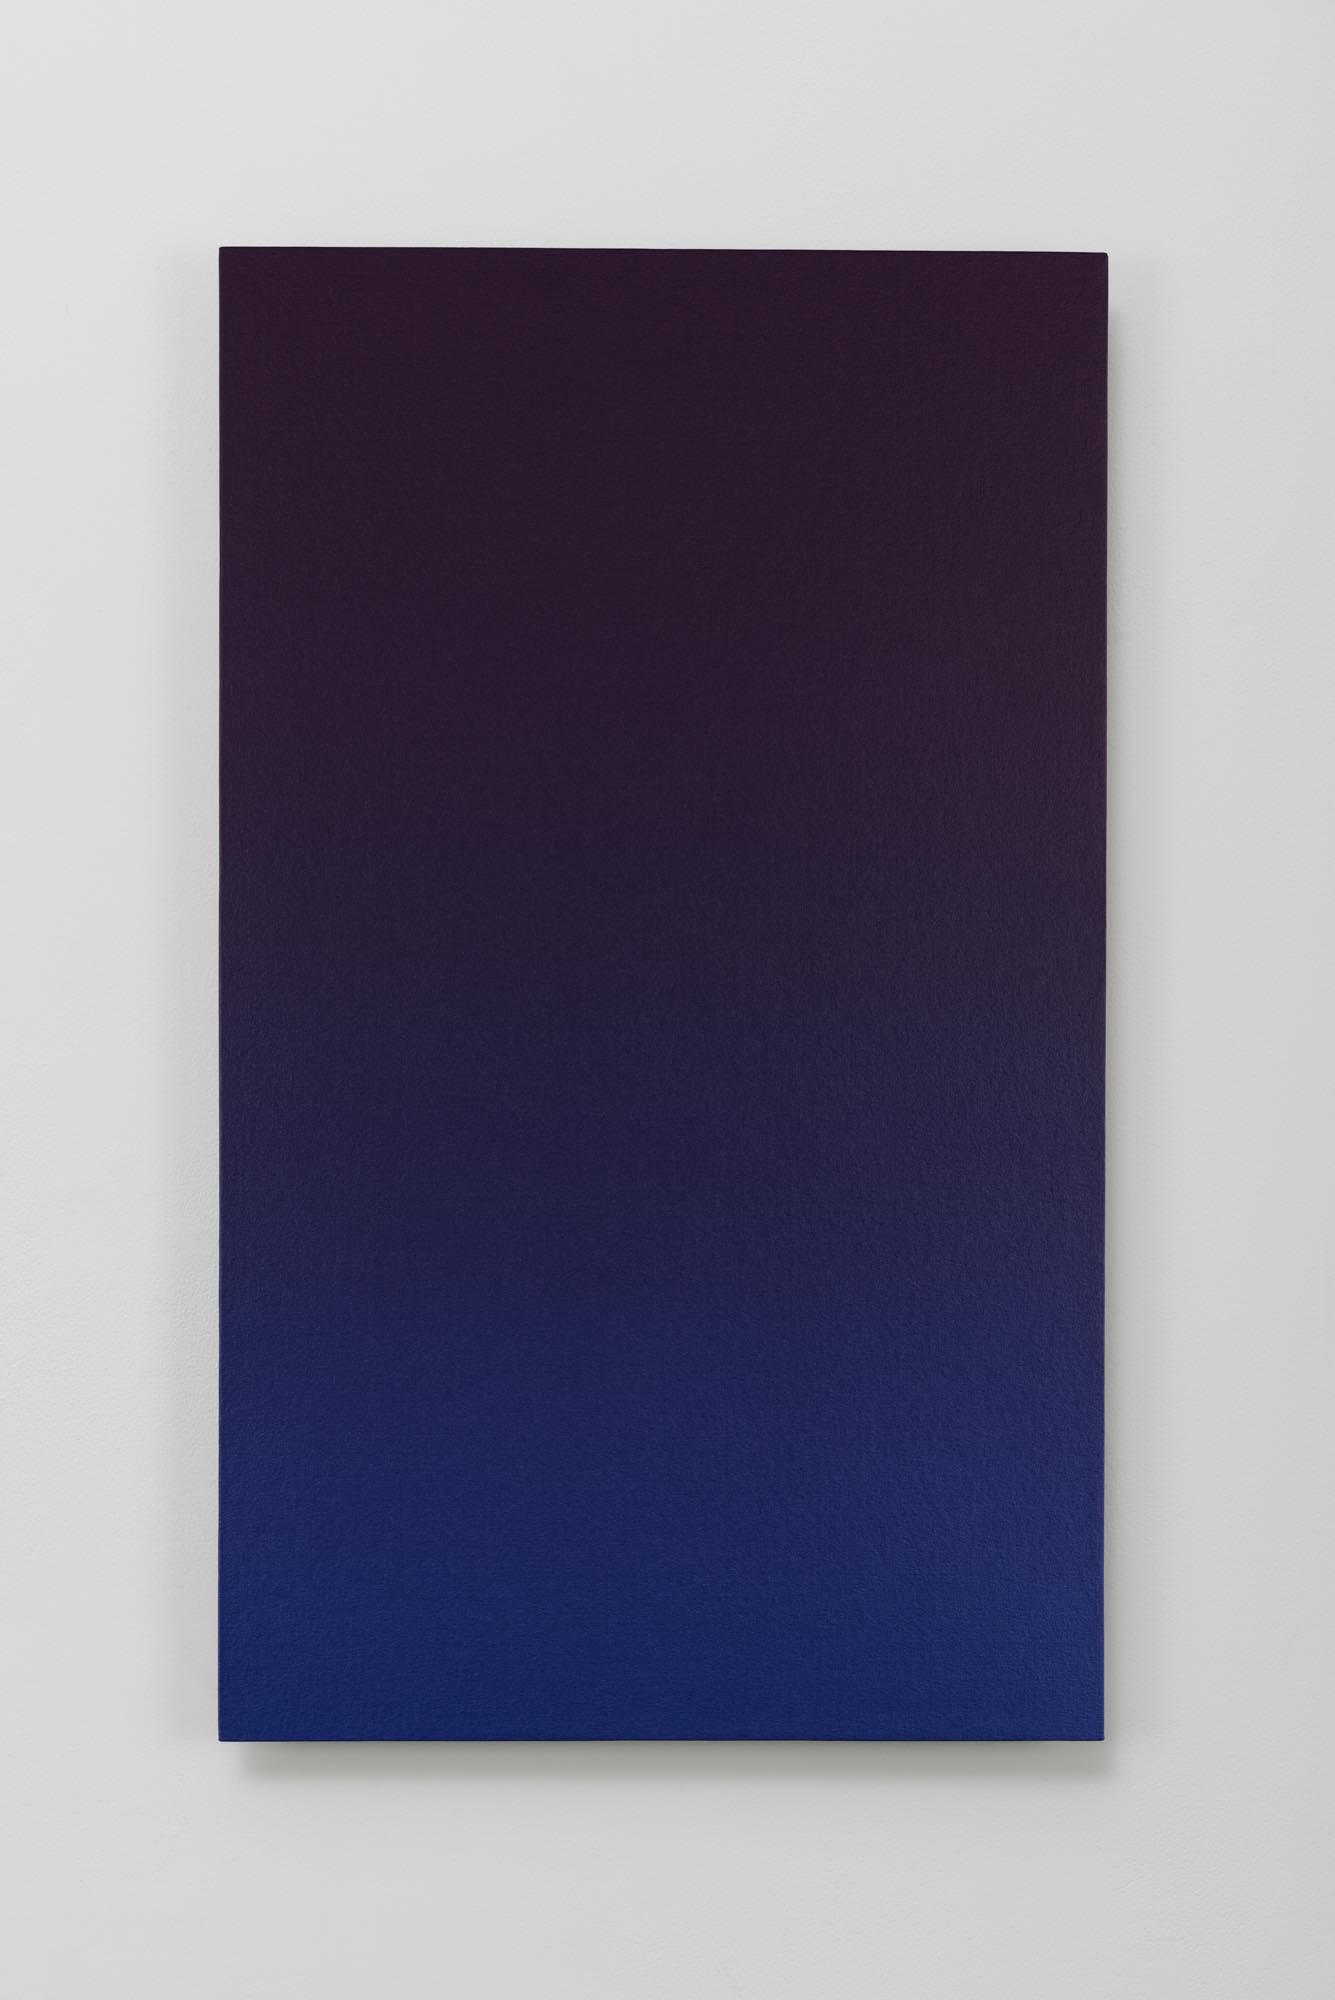 pilot, 2015, acrylic on cotton and panel, 92x 54.5 cm